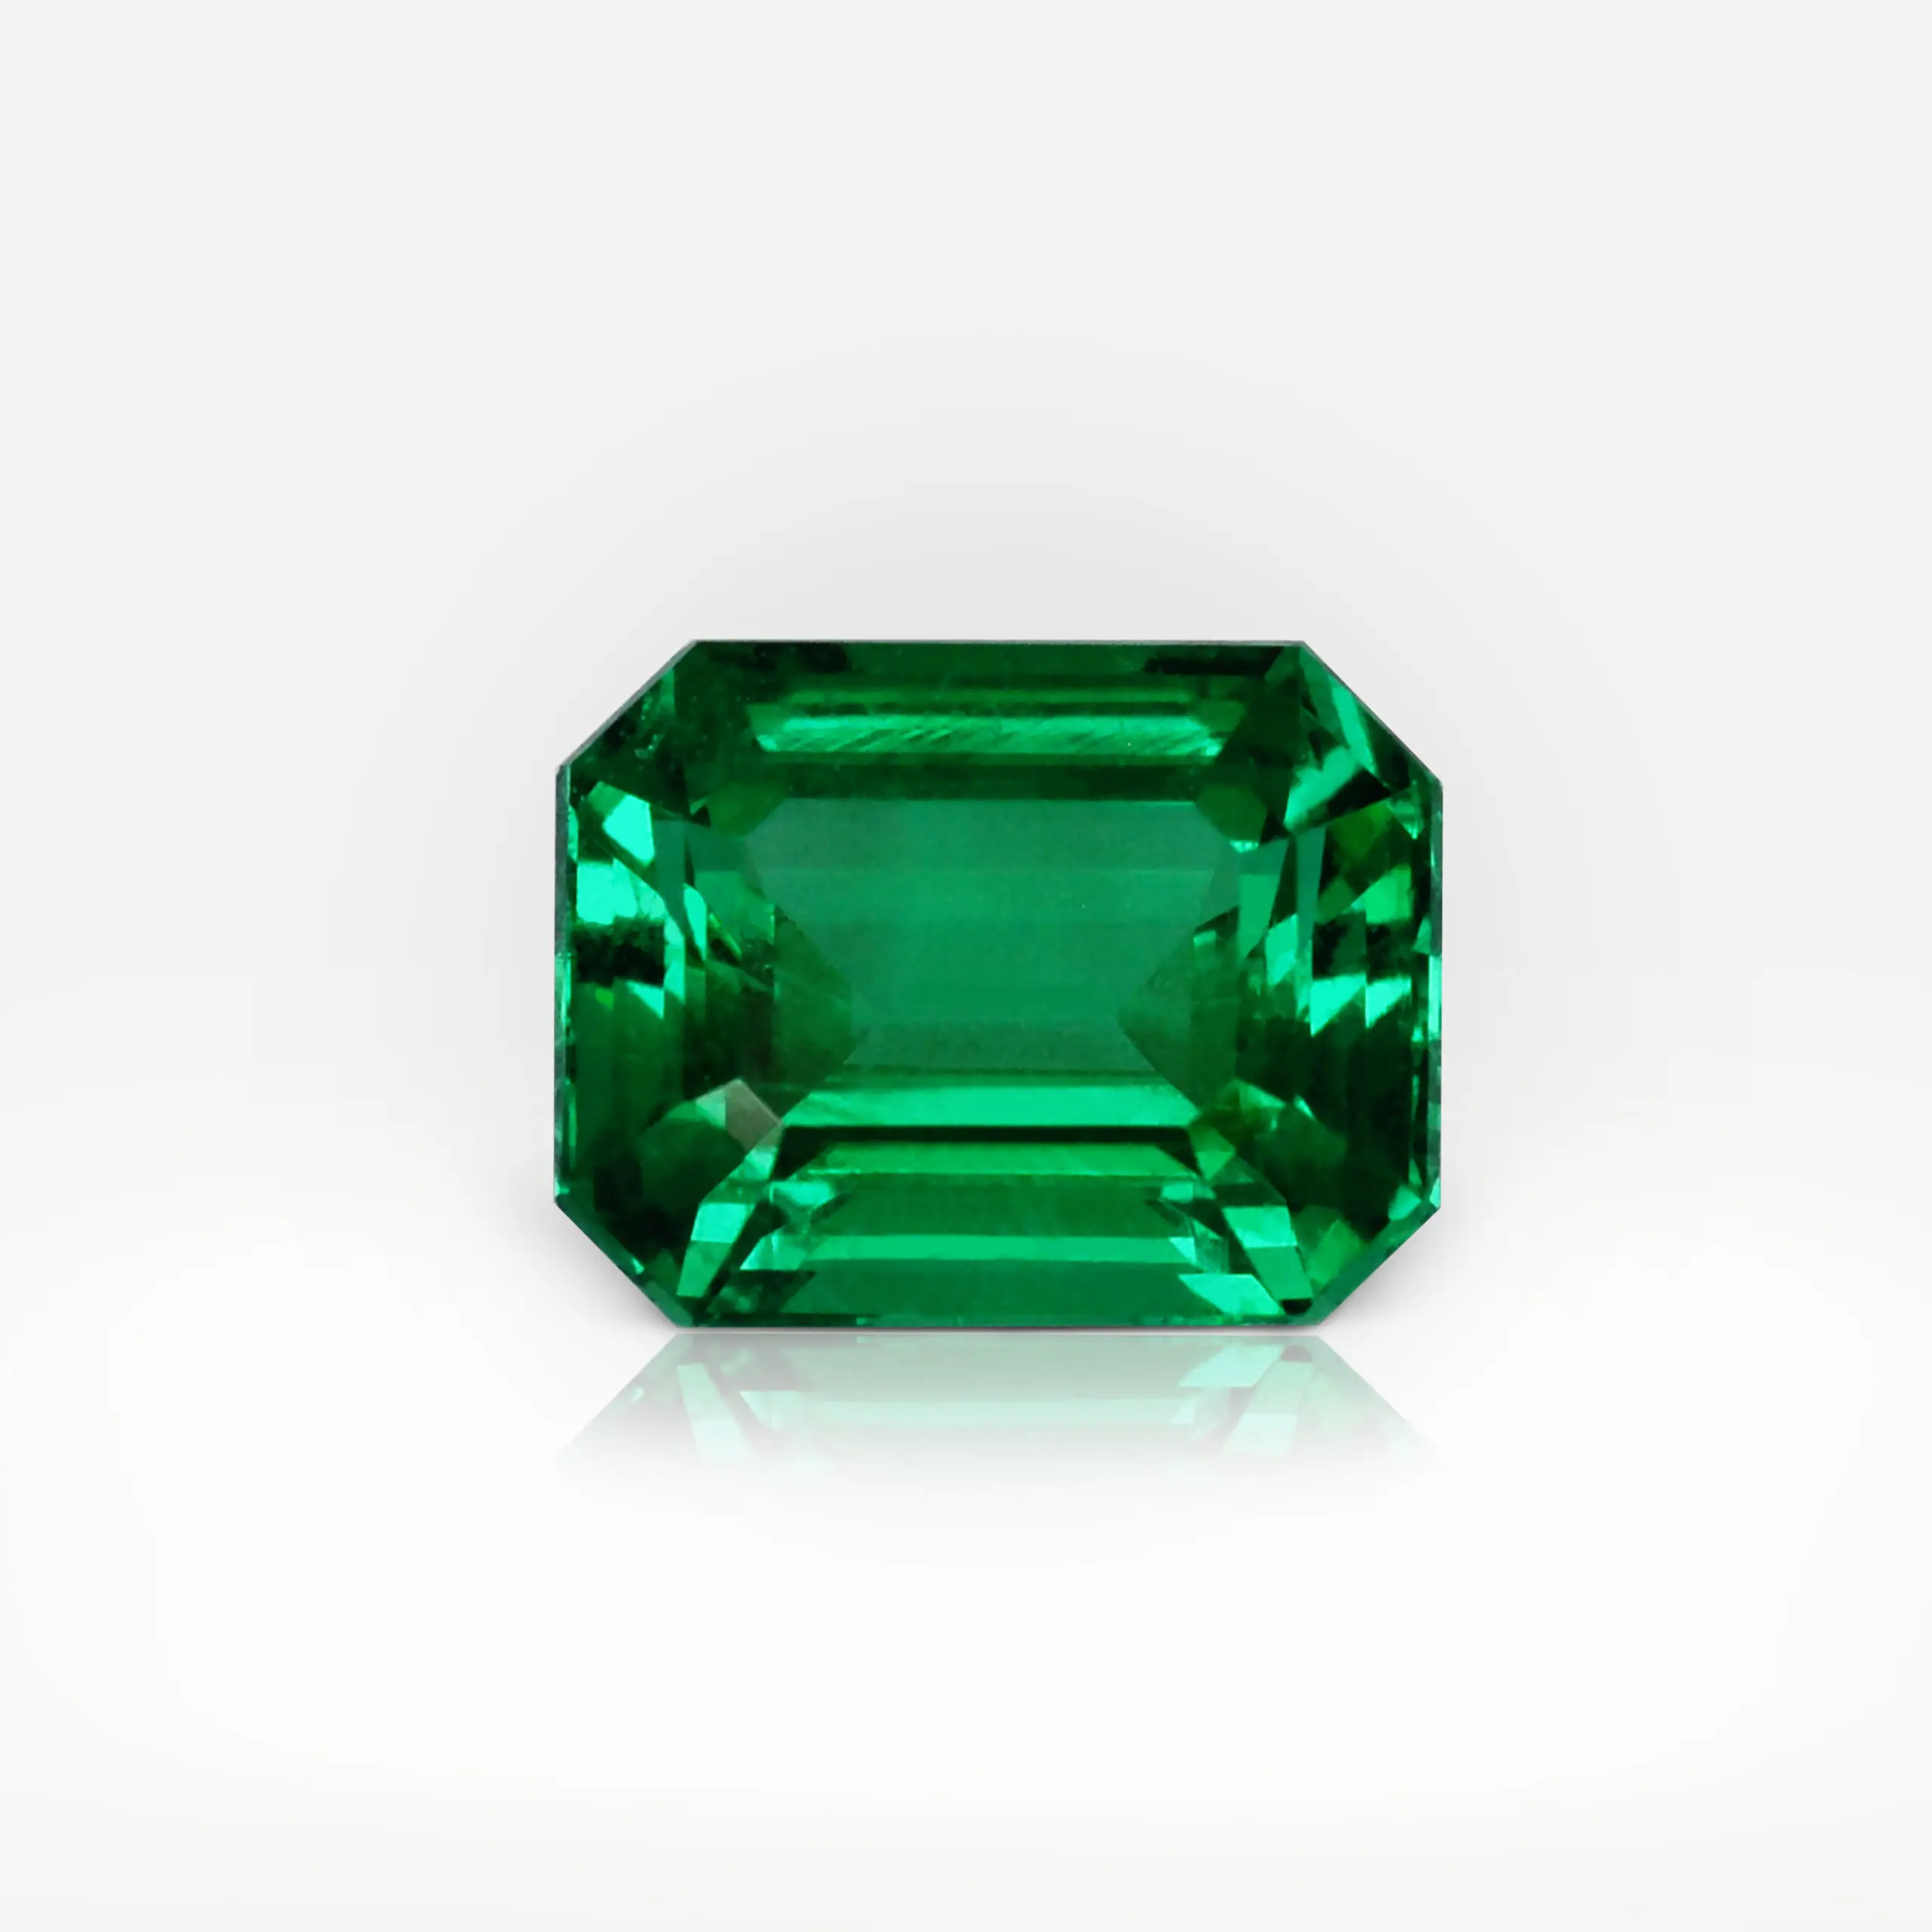 1.27 carat Green Emerald Shape Zambian Emerald - picture 1